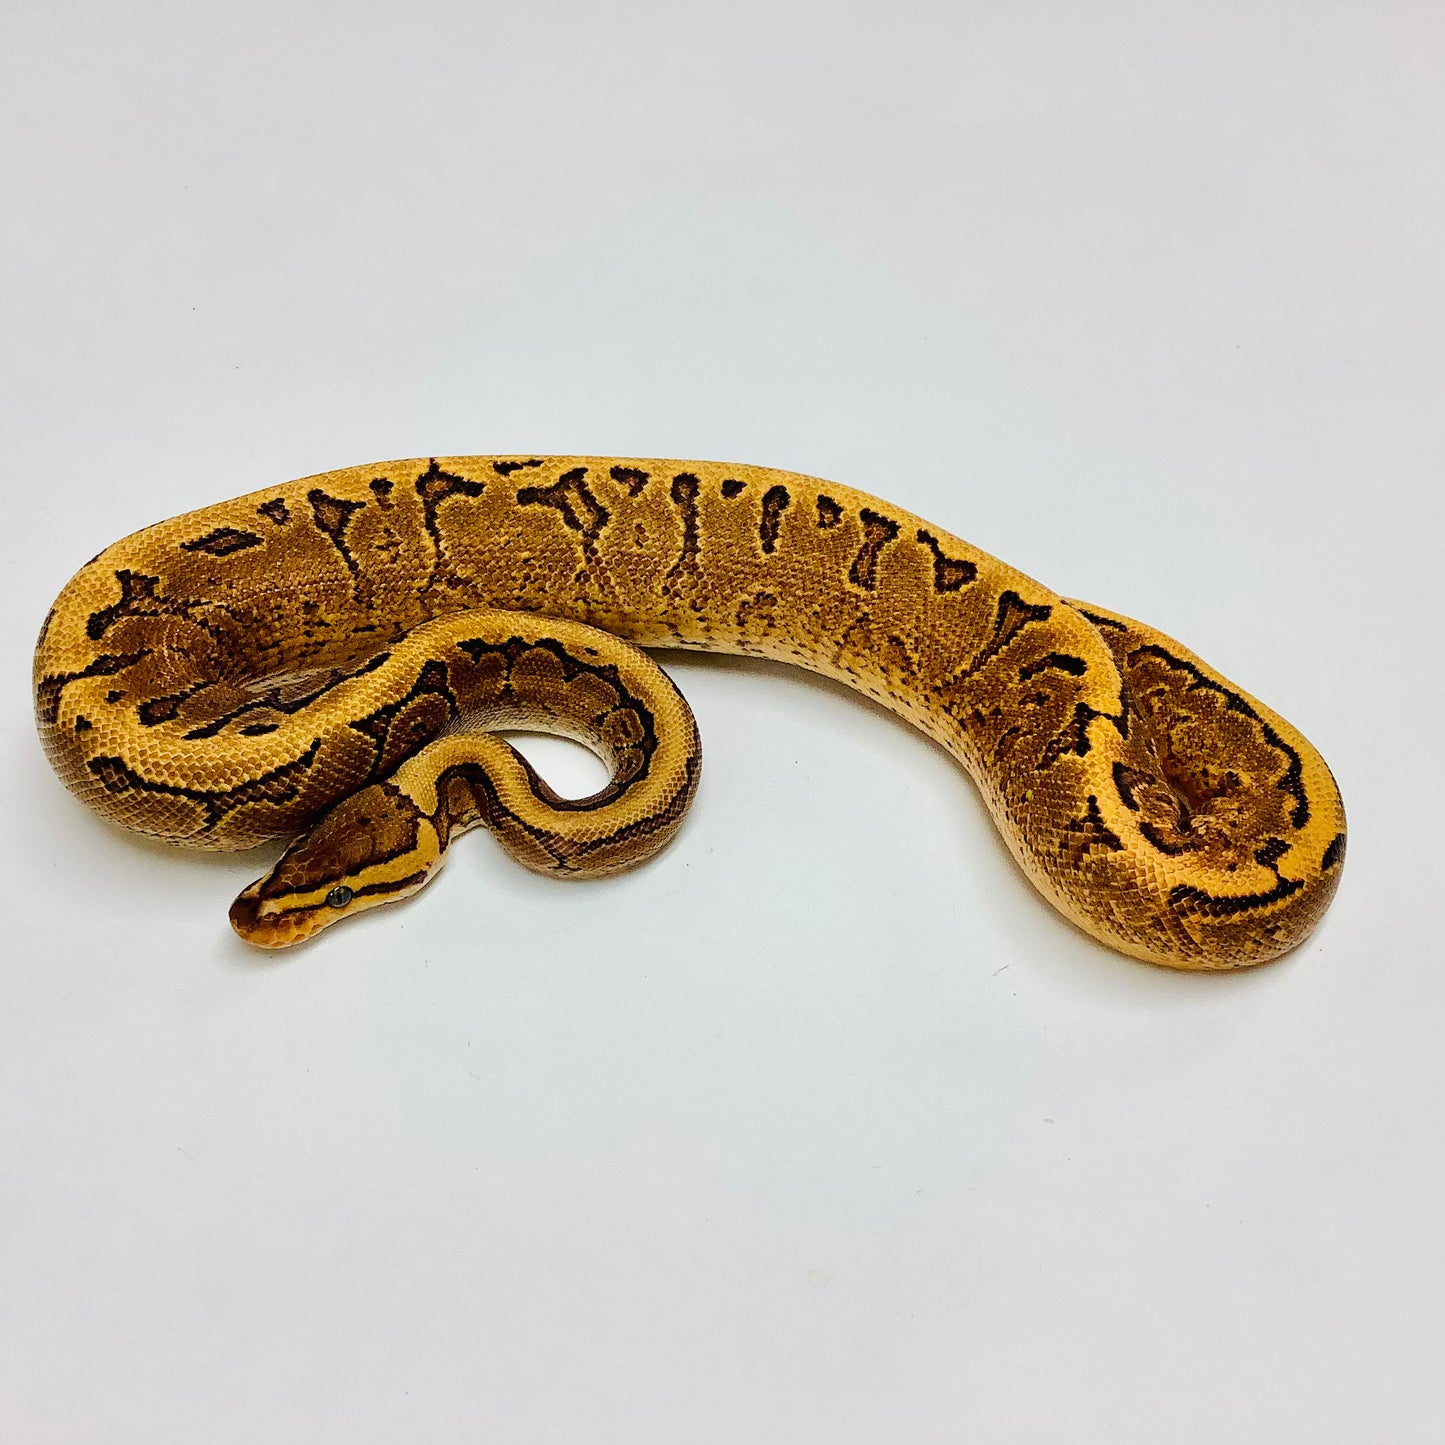 Calico Pinstripe Yellowbelly Ball Python- Male #2022M01